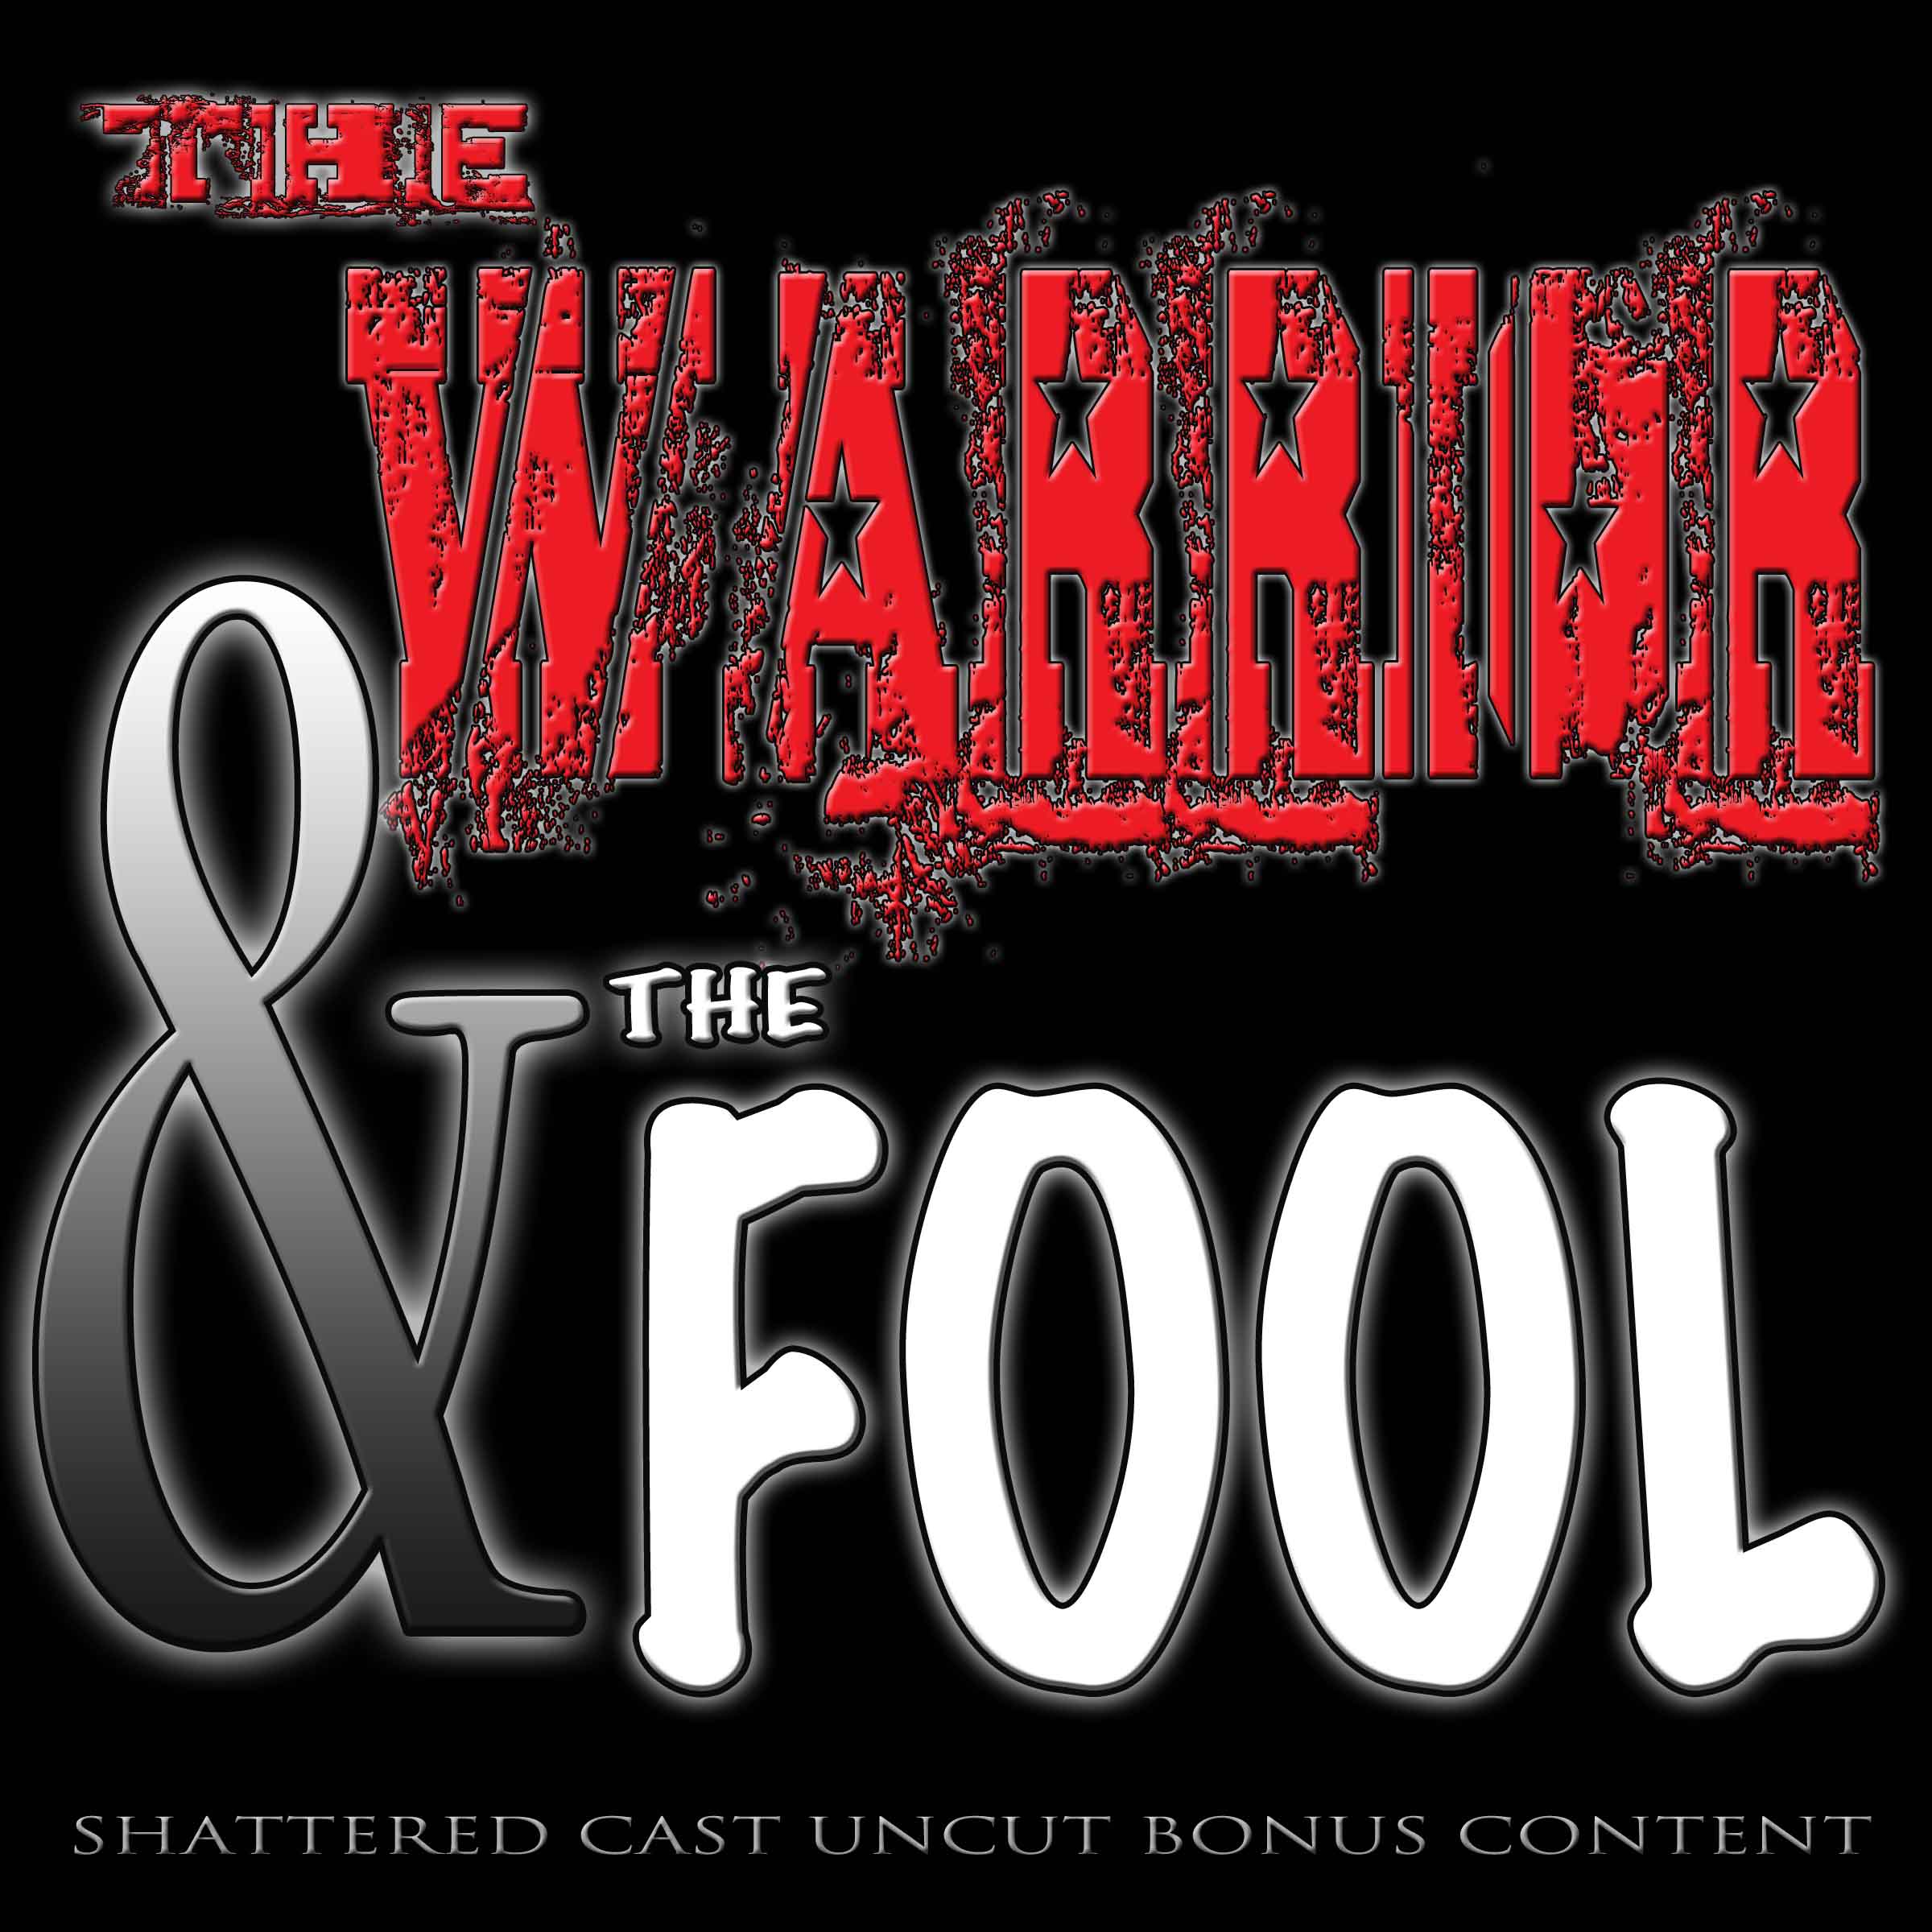 The Warrior & The Fool: Episode 1 Streaking